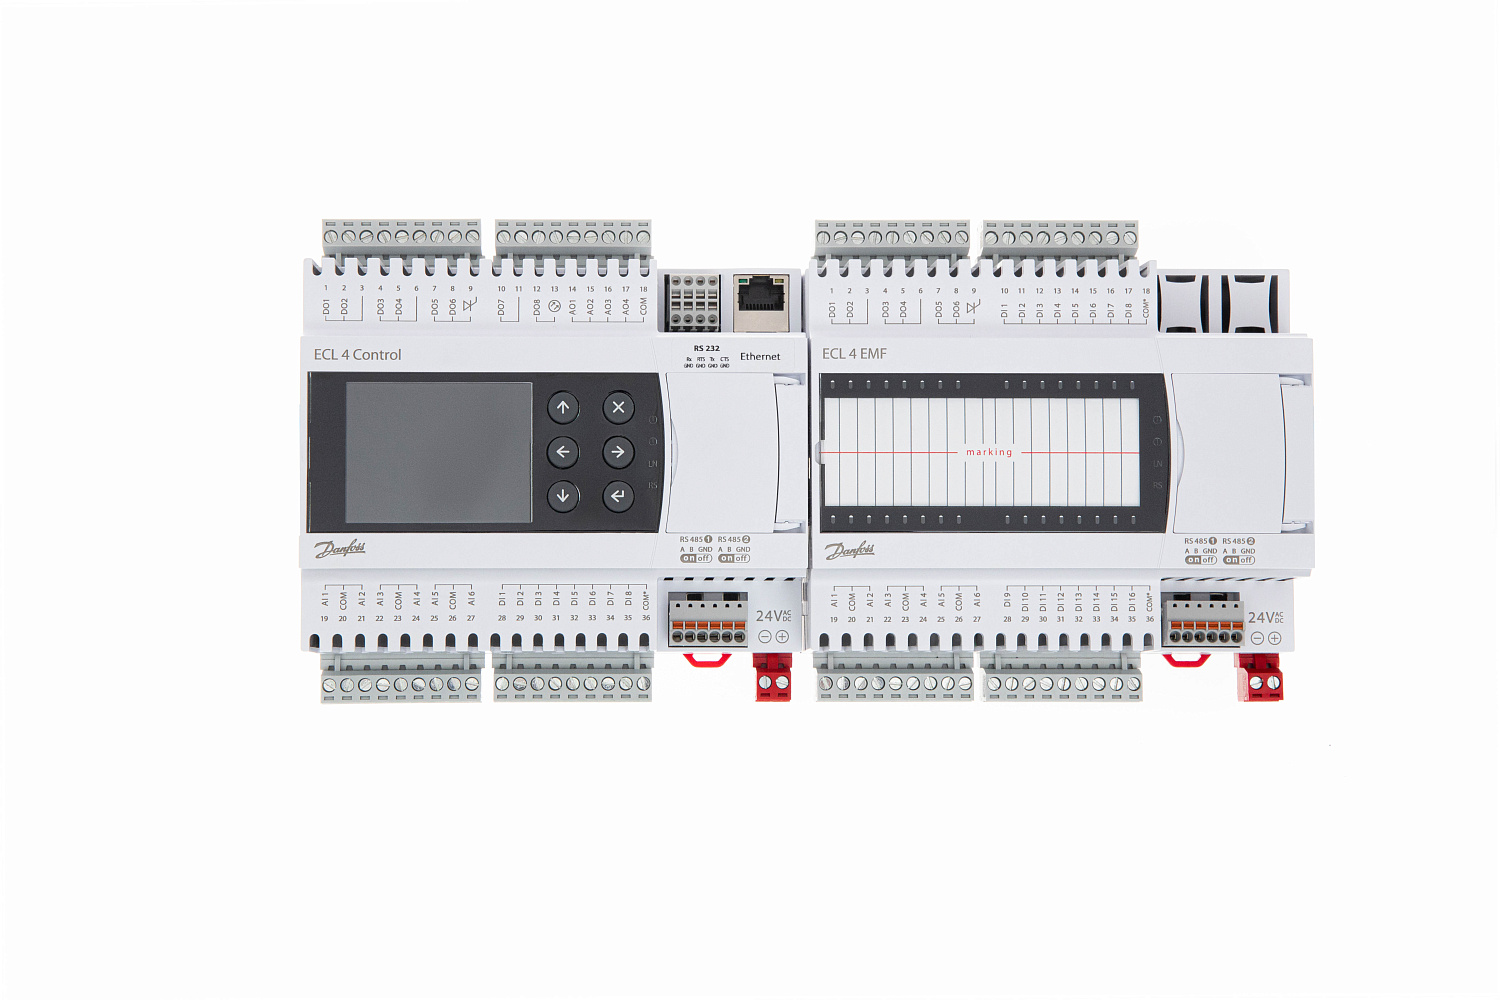 Контроллер ECL4 Control 361R PLUS Ethernet,24V AC/DC Ридан 087H374982R